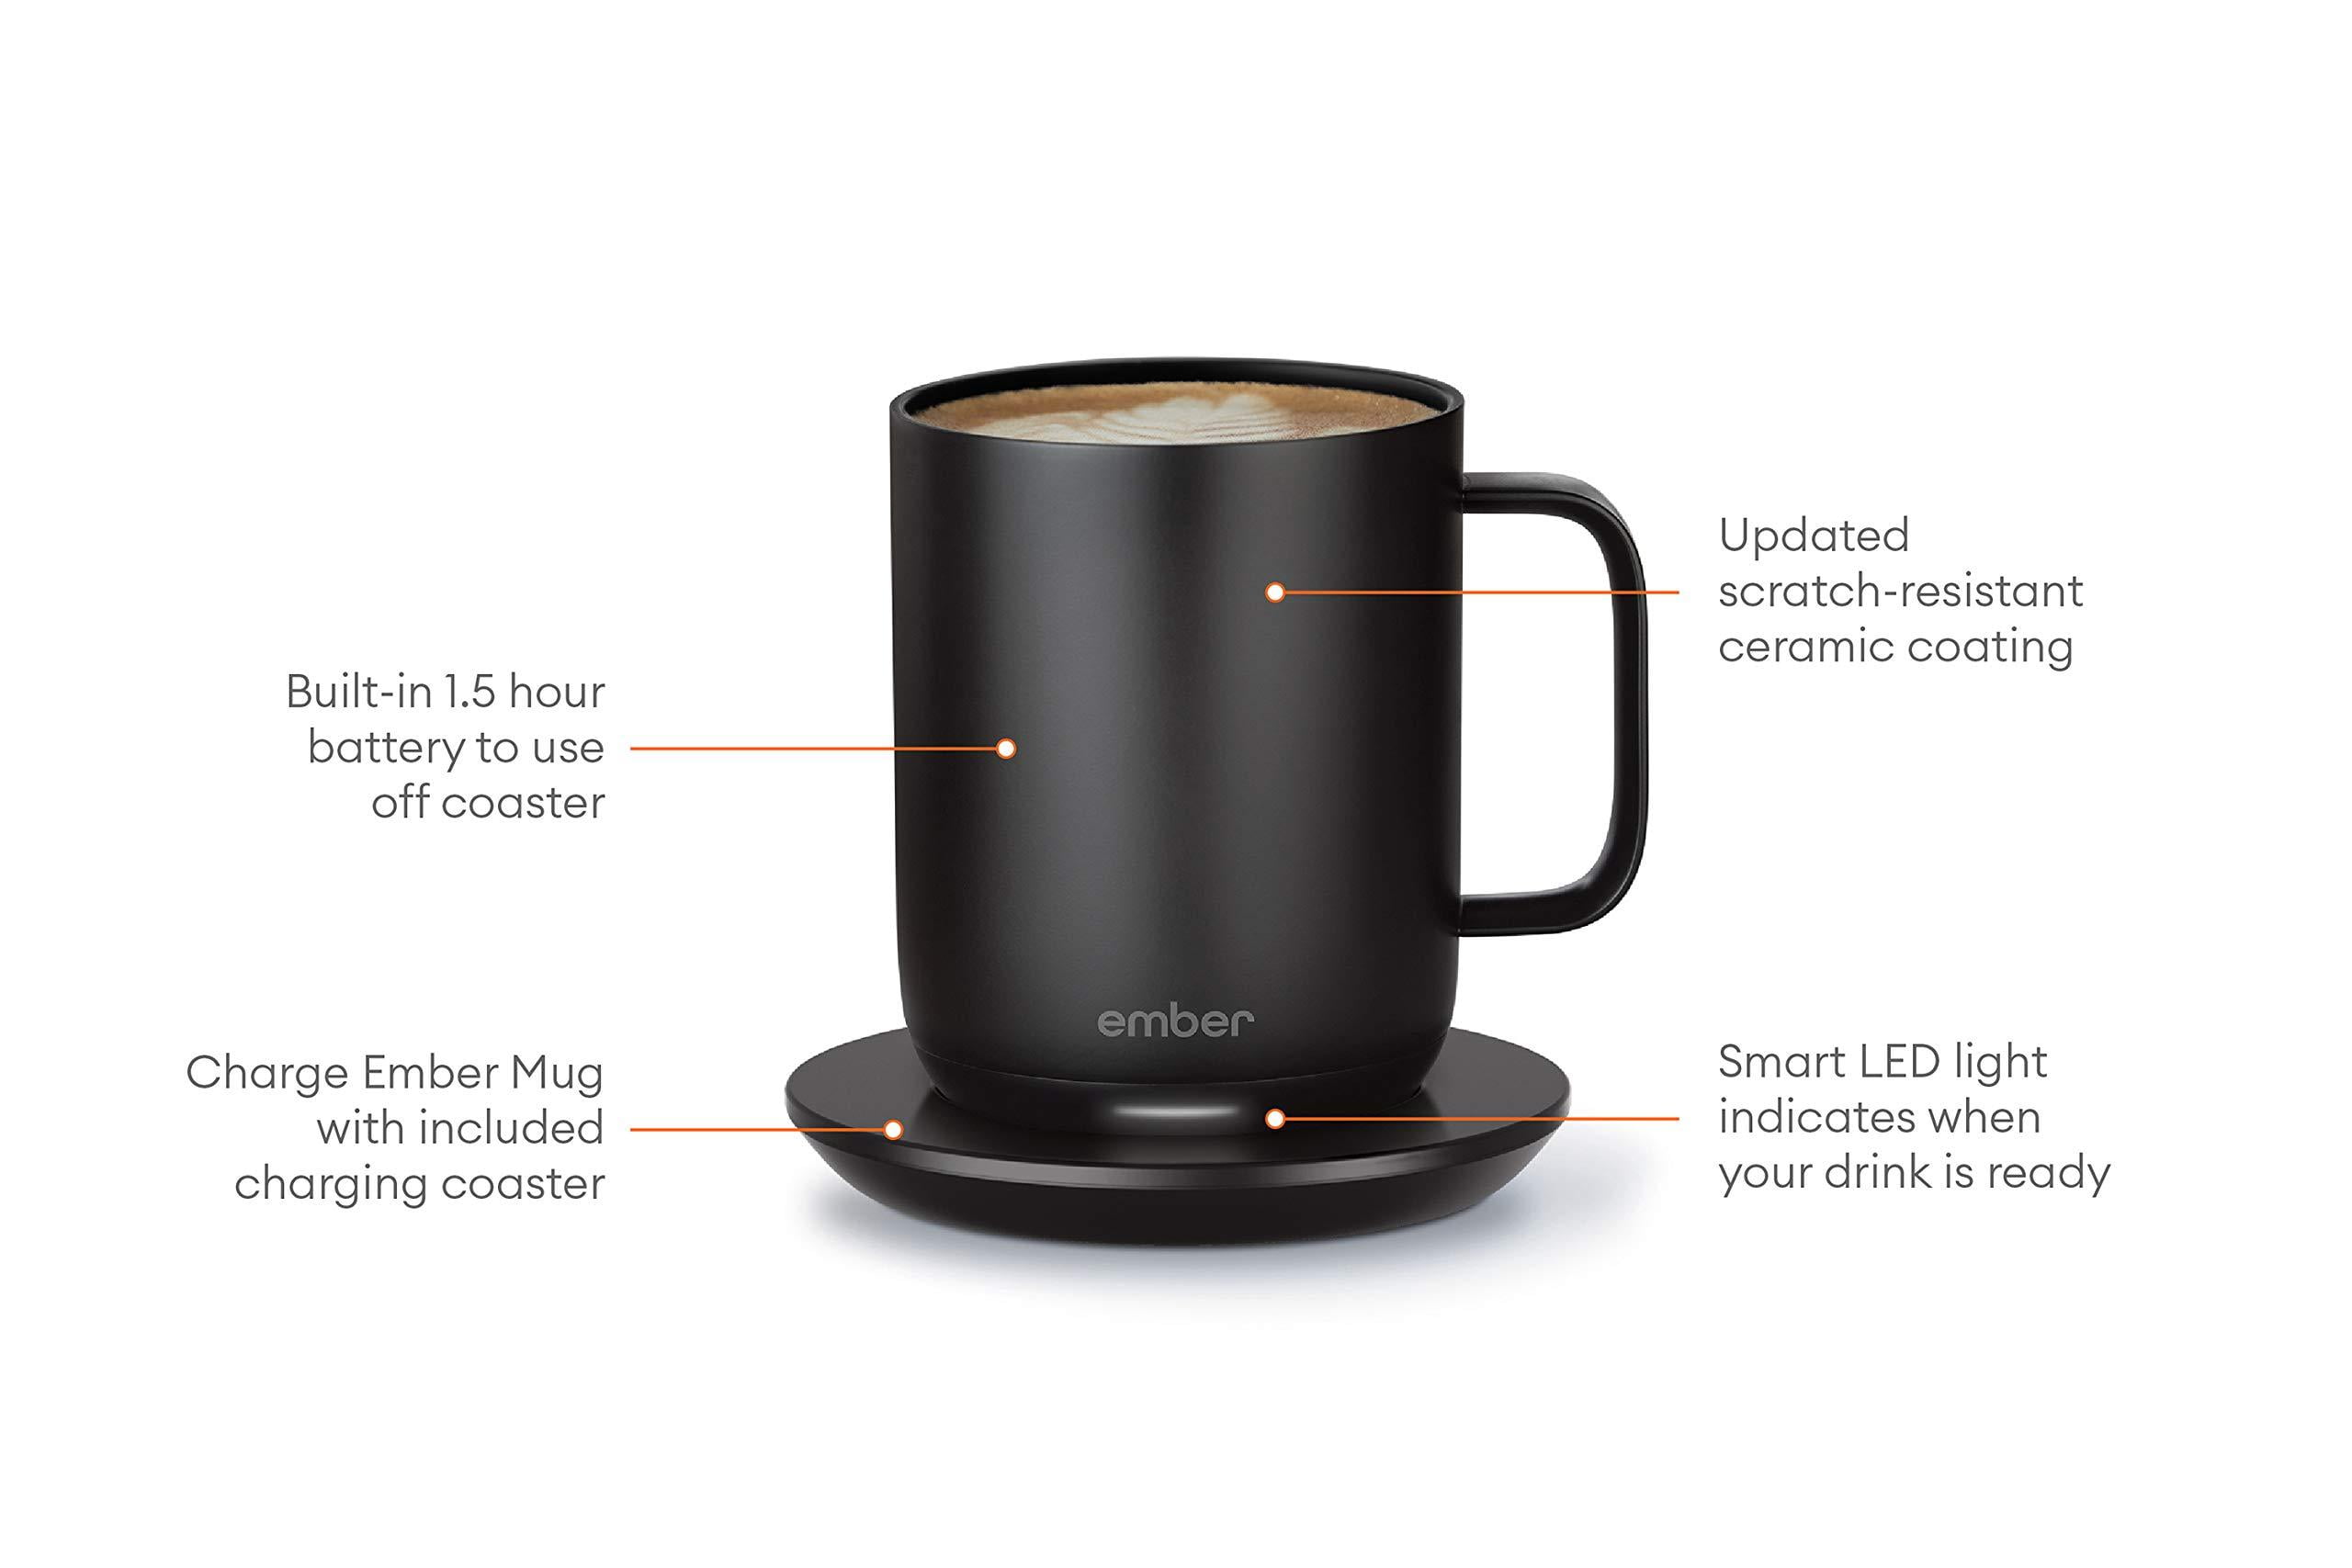 Ember Control Smart Travel Mug 2 - 12oz - App Controlled Coffee